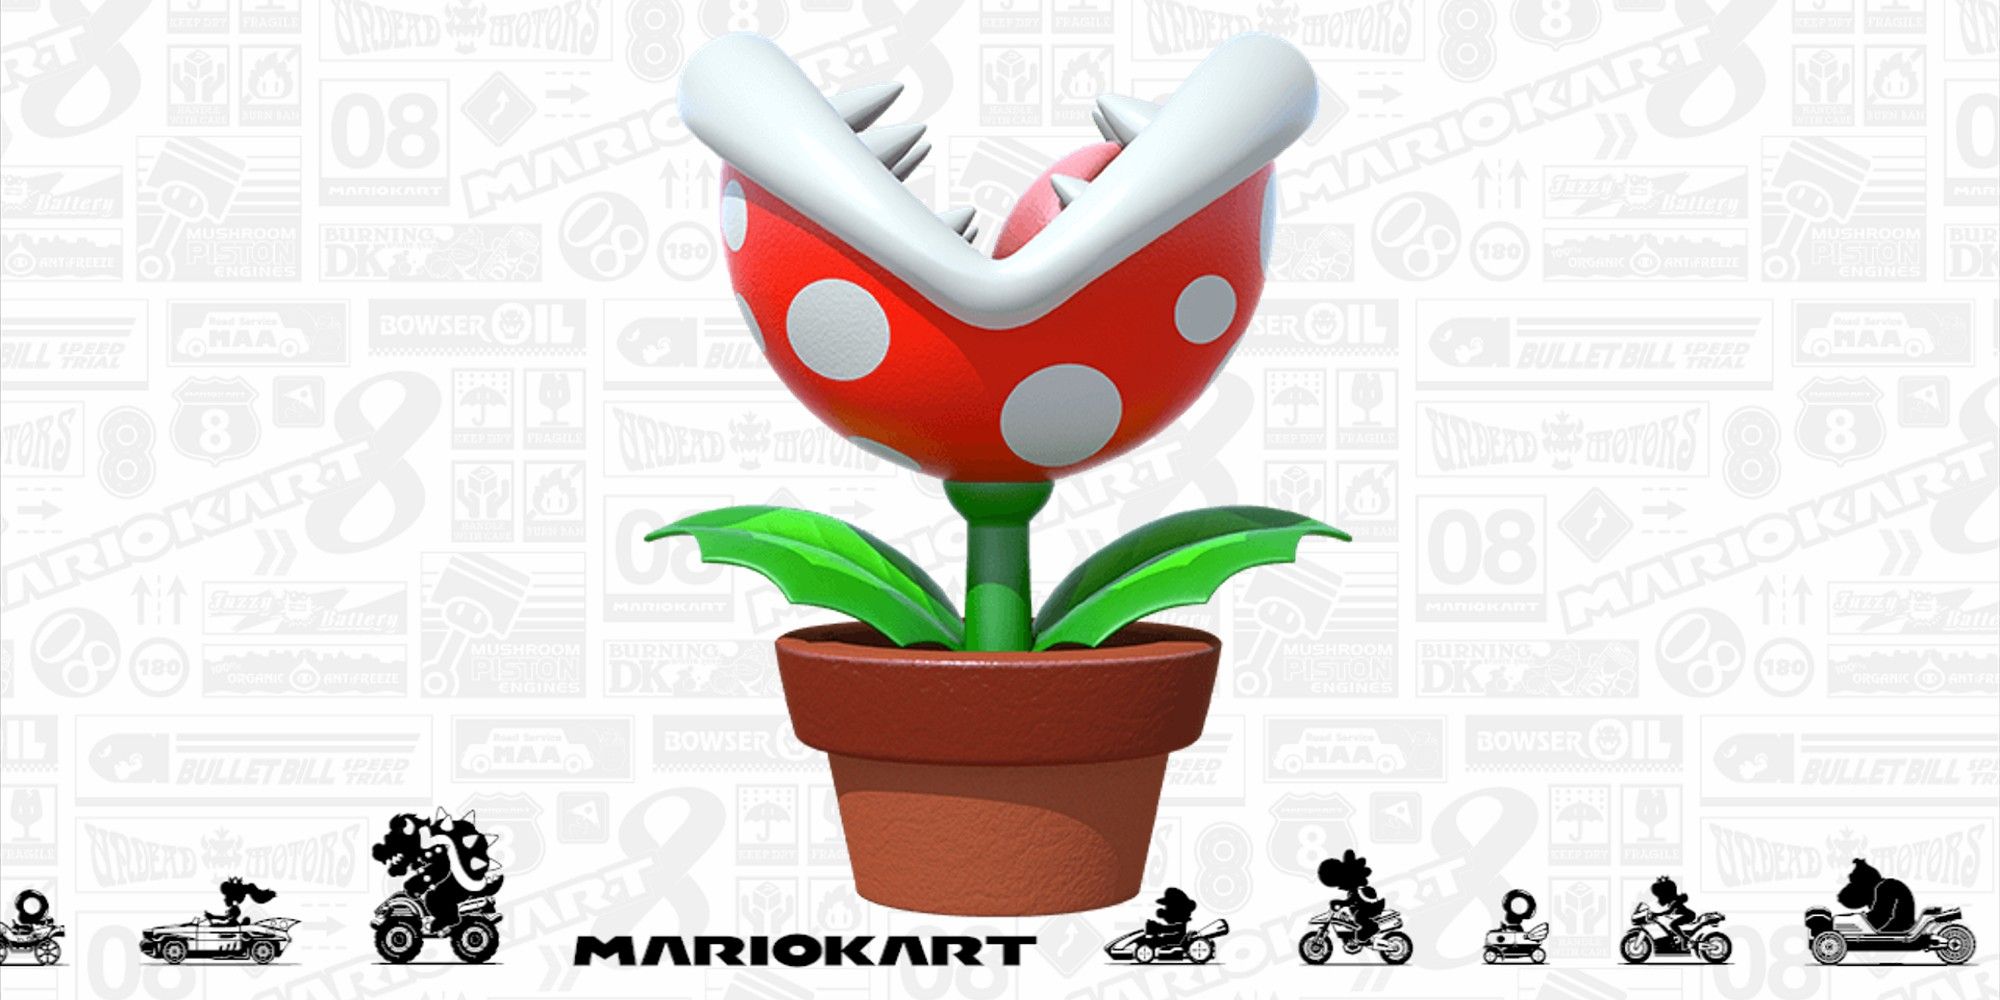 Piranha-Pflanze gegen den Mario Kart 8-Ladebildschirm. 